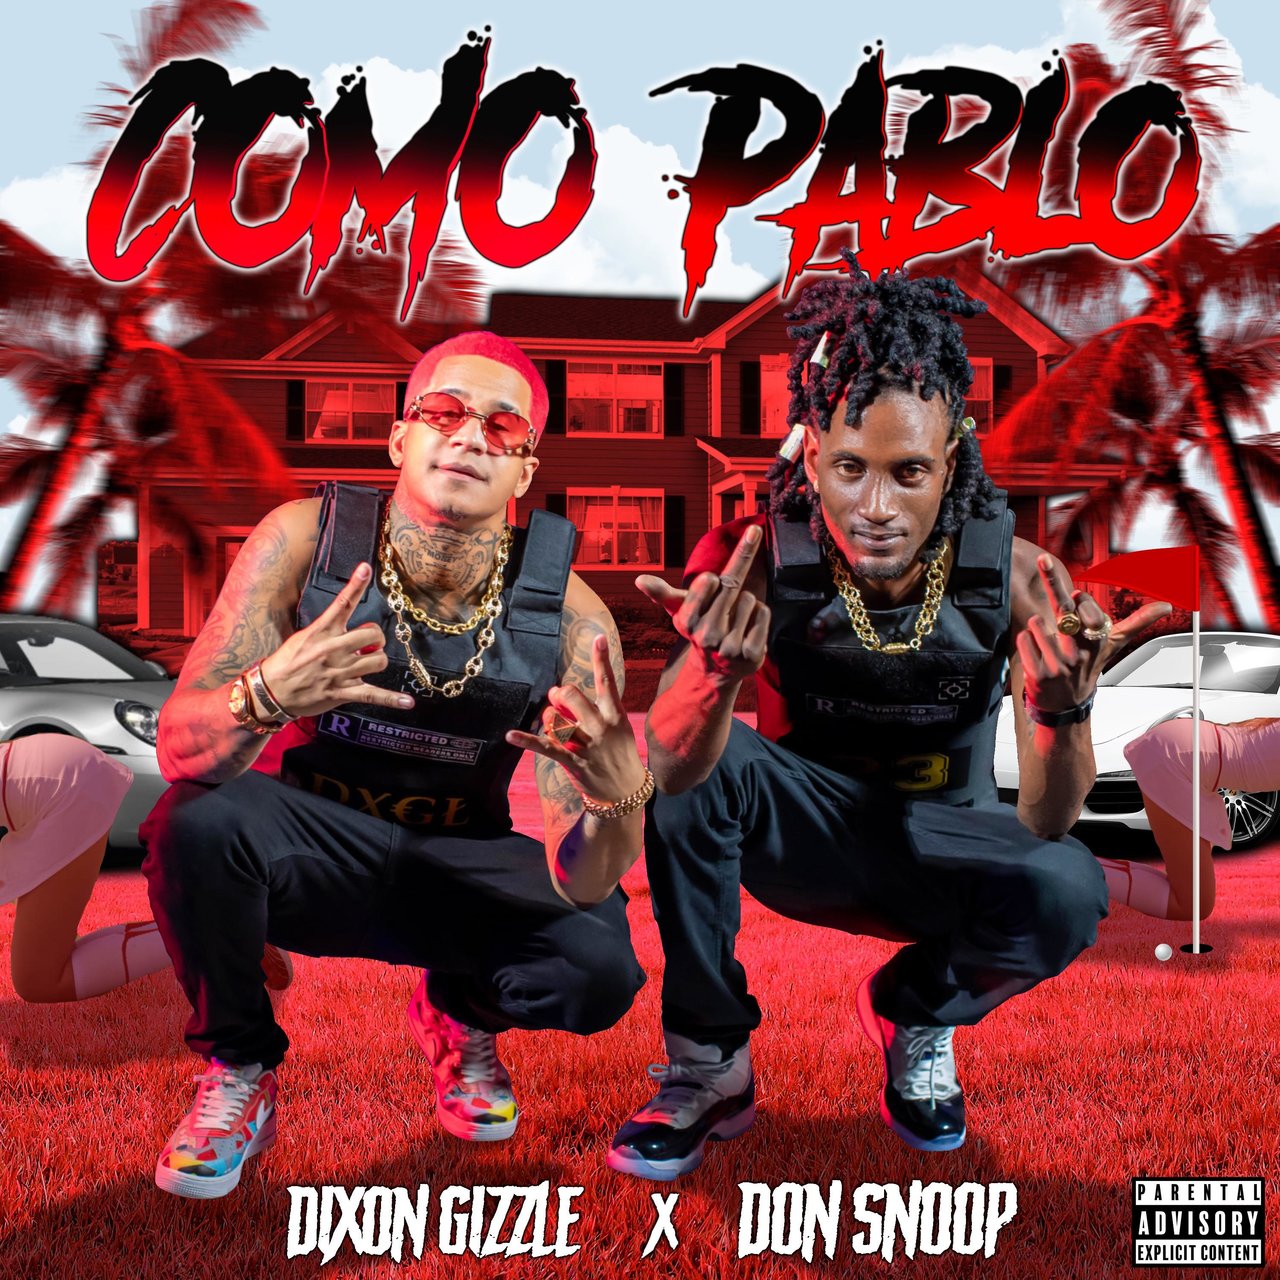 Dixon Gizzle - Como Pablo (ft. Don Snoop) (Cover)